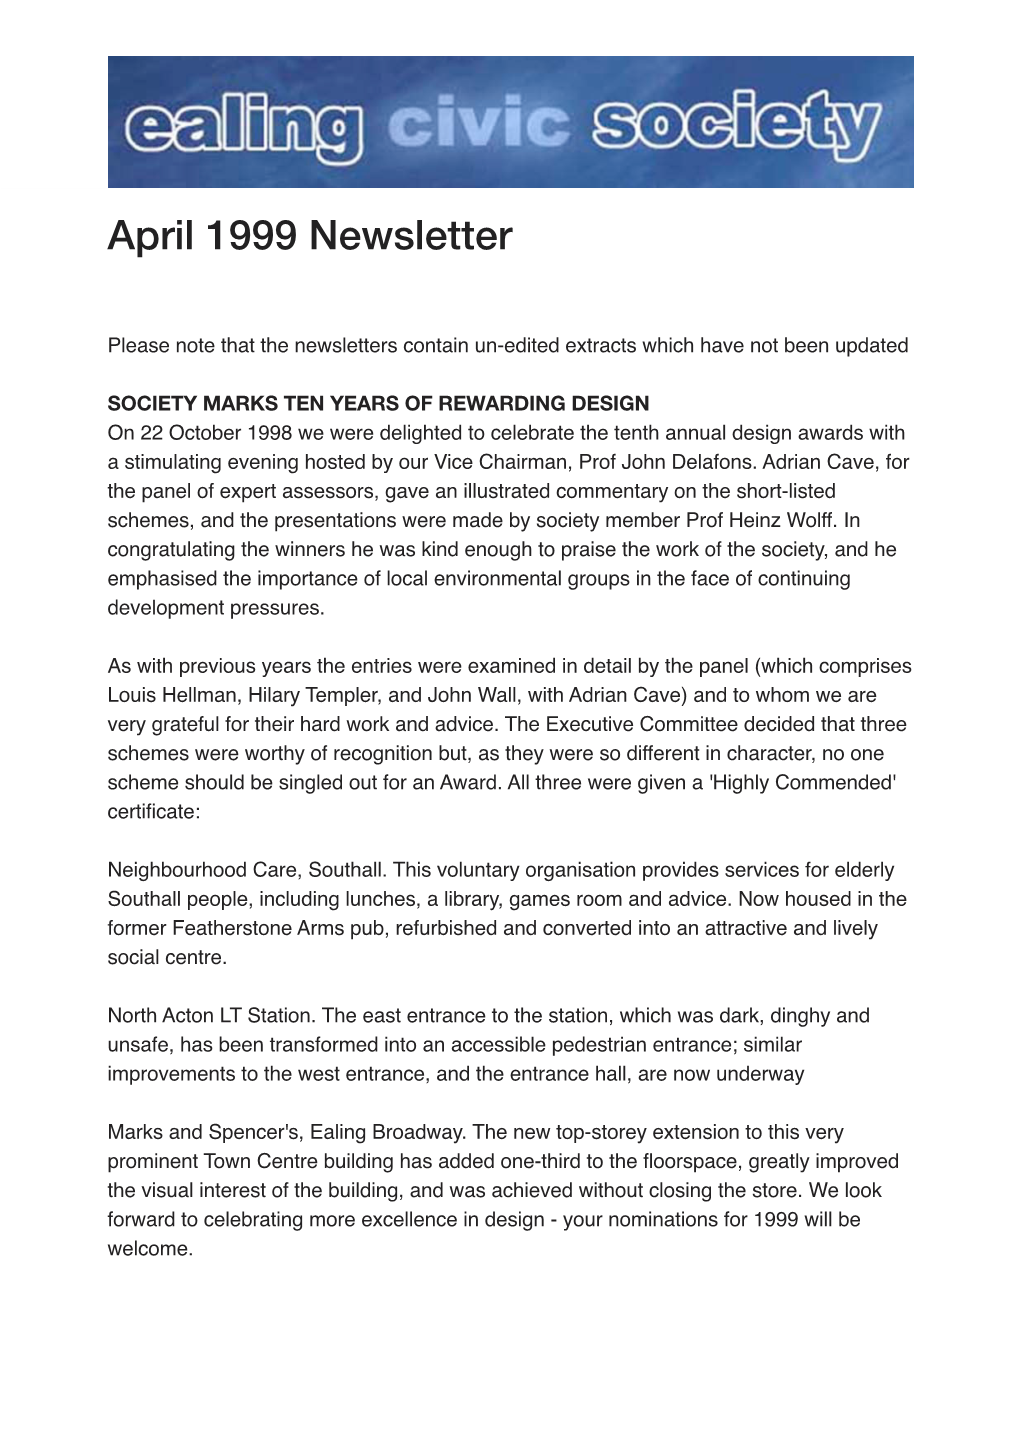 Ealing Civic Society Newsletter – April 1999